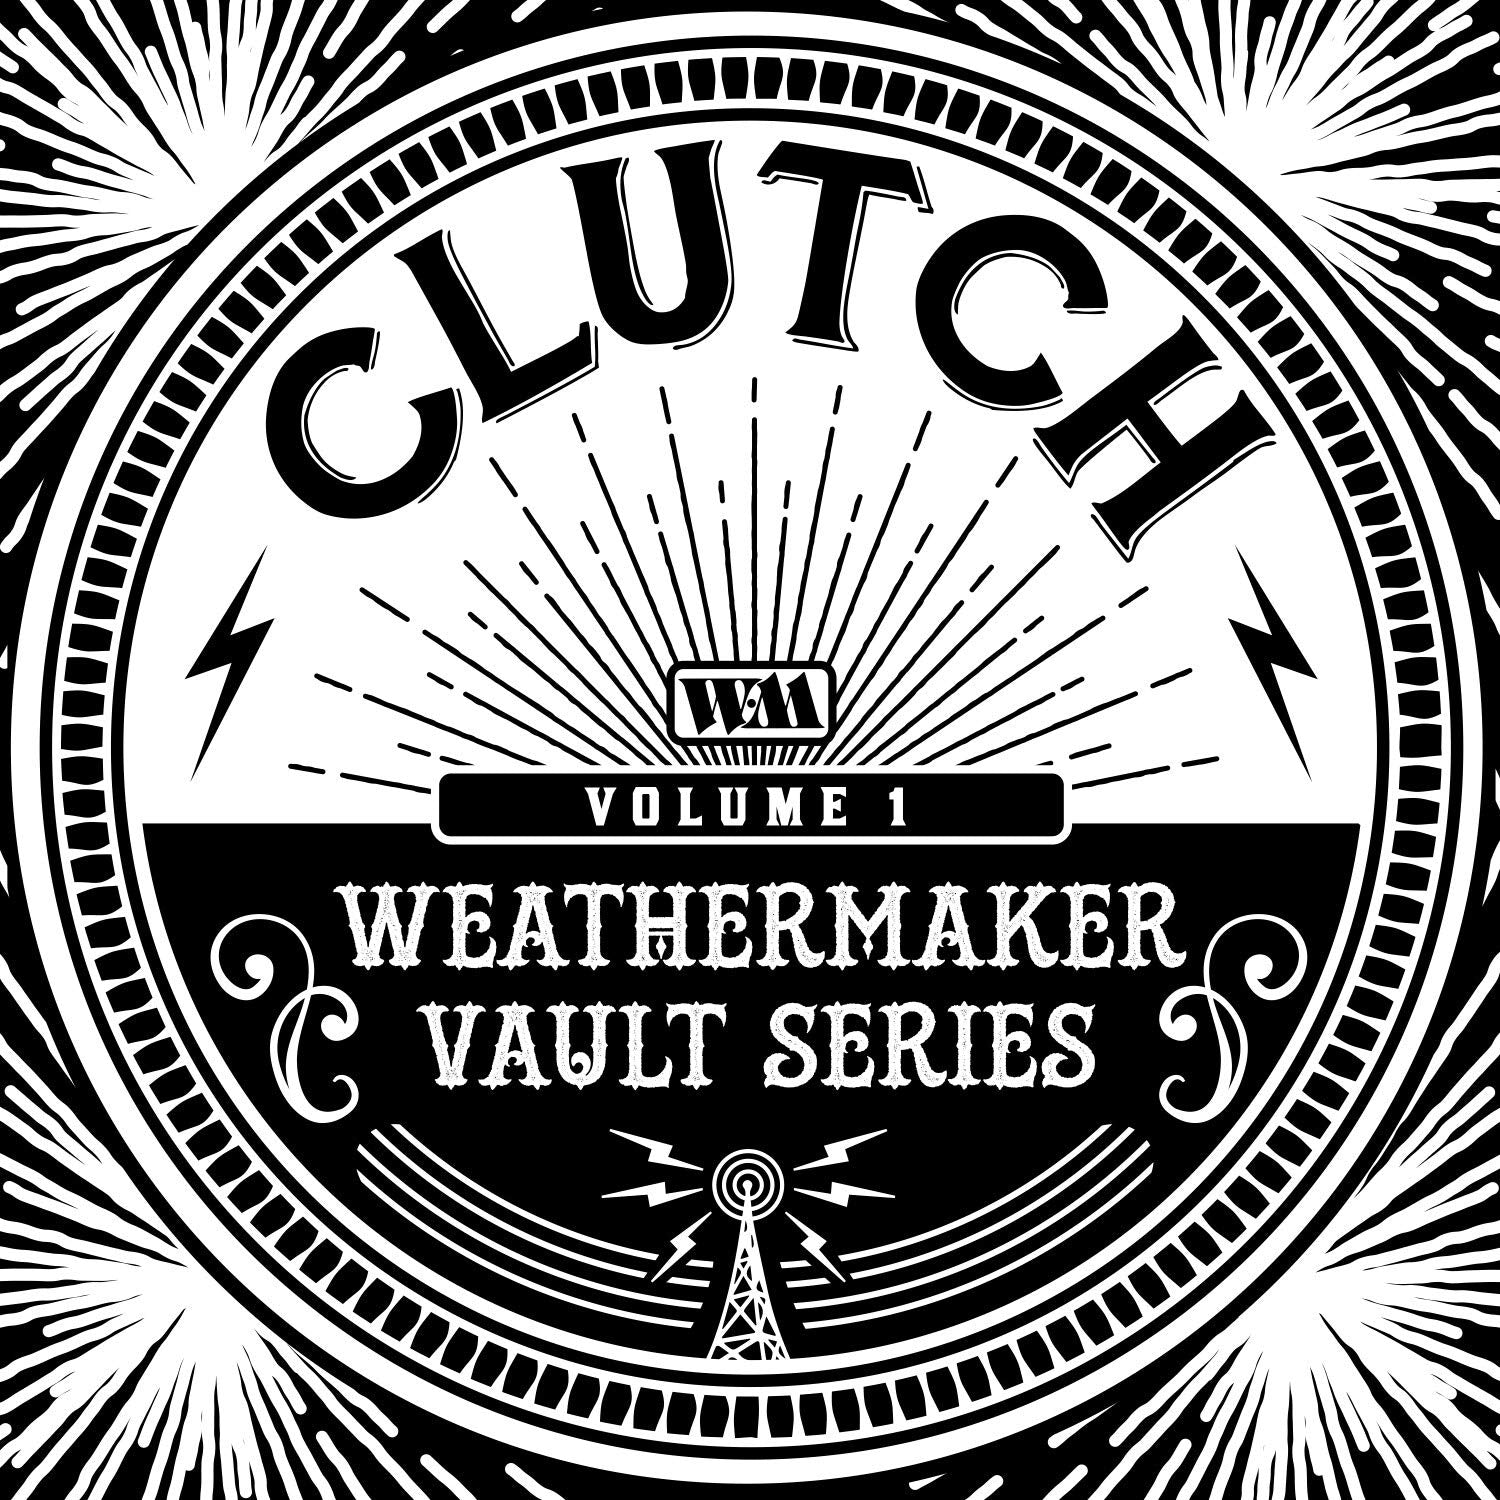 Clutch - Weathermaker Vault Series 1 [Indie-Exclusive White Vinyl]